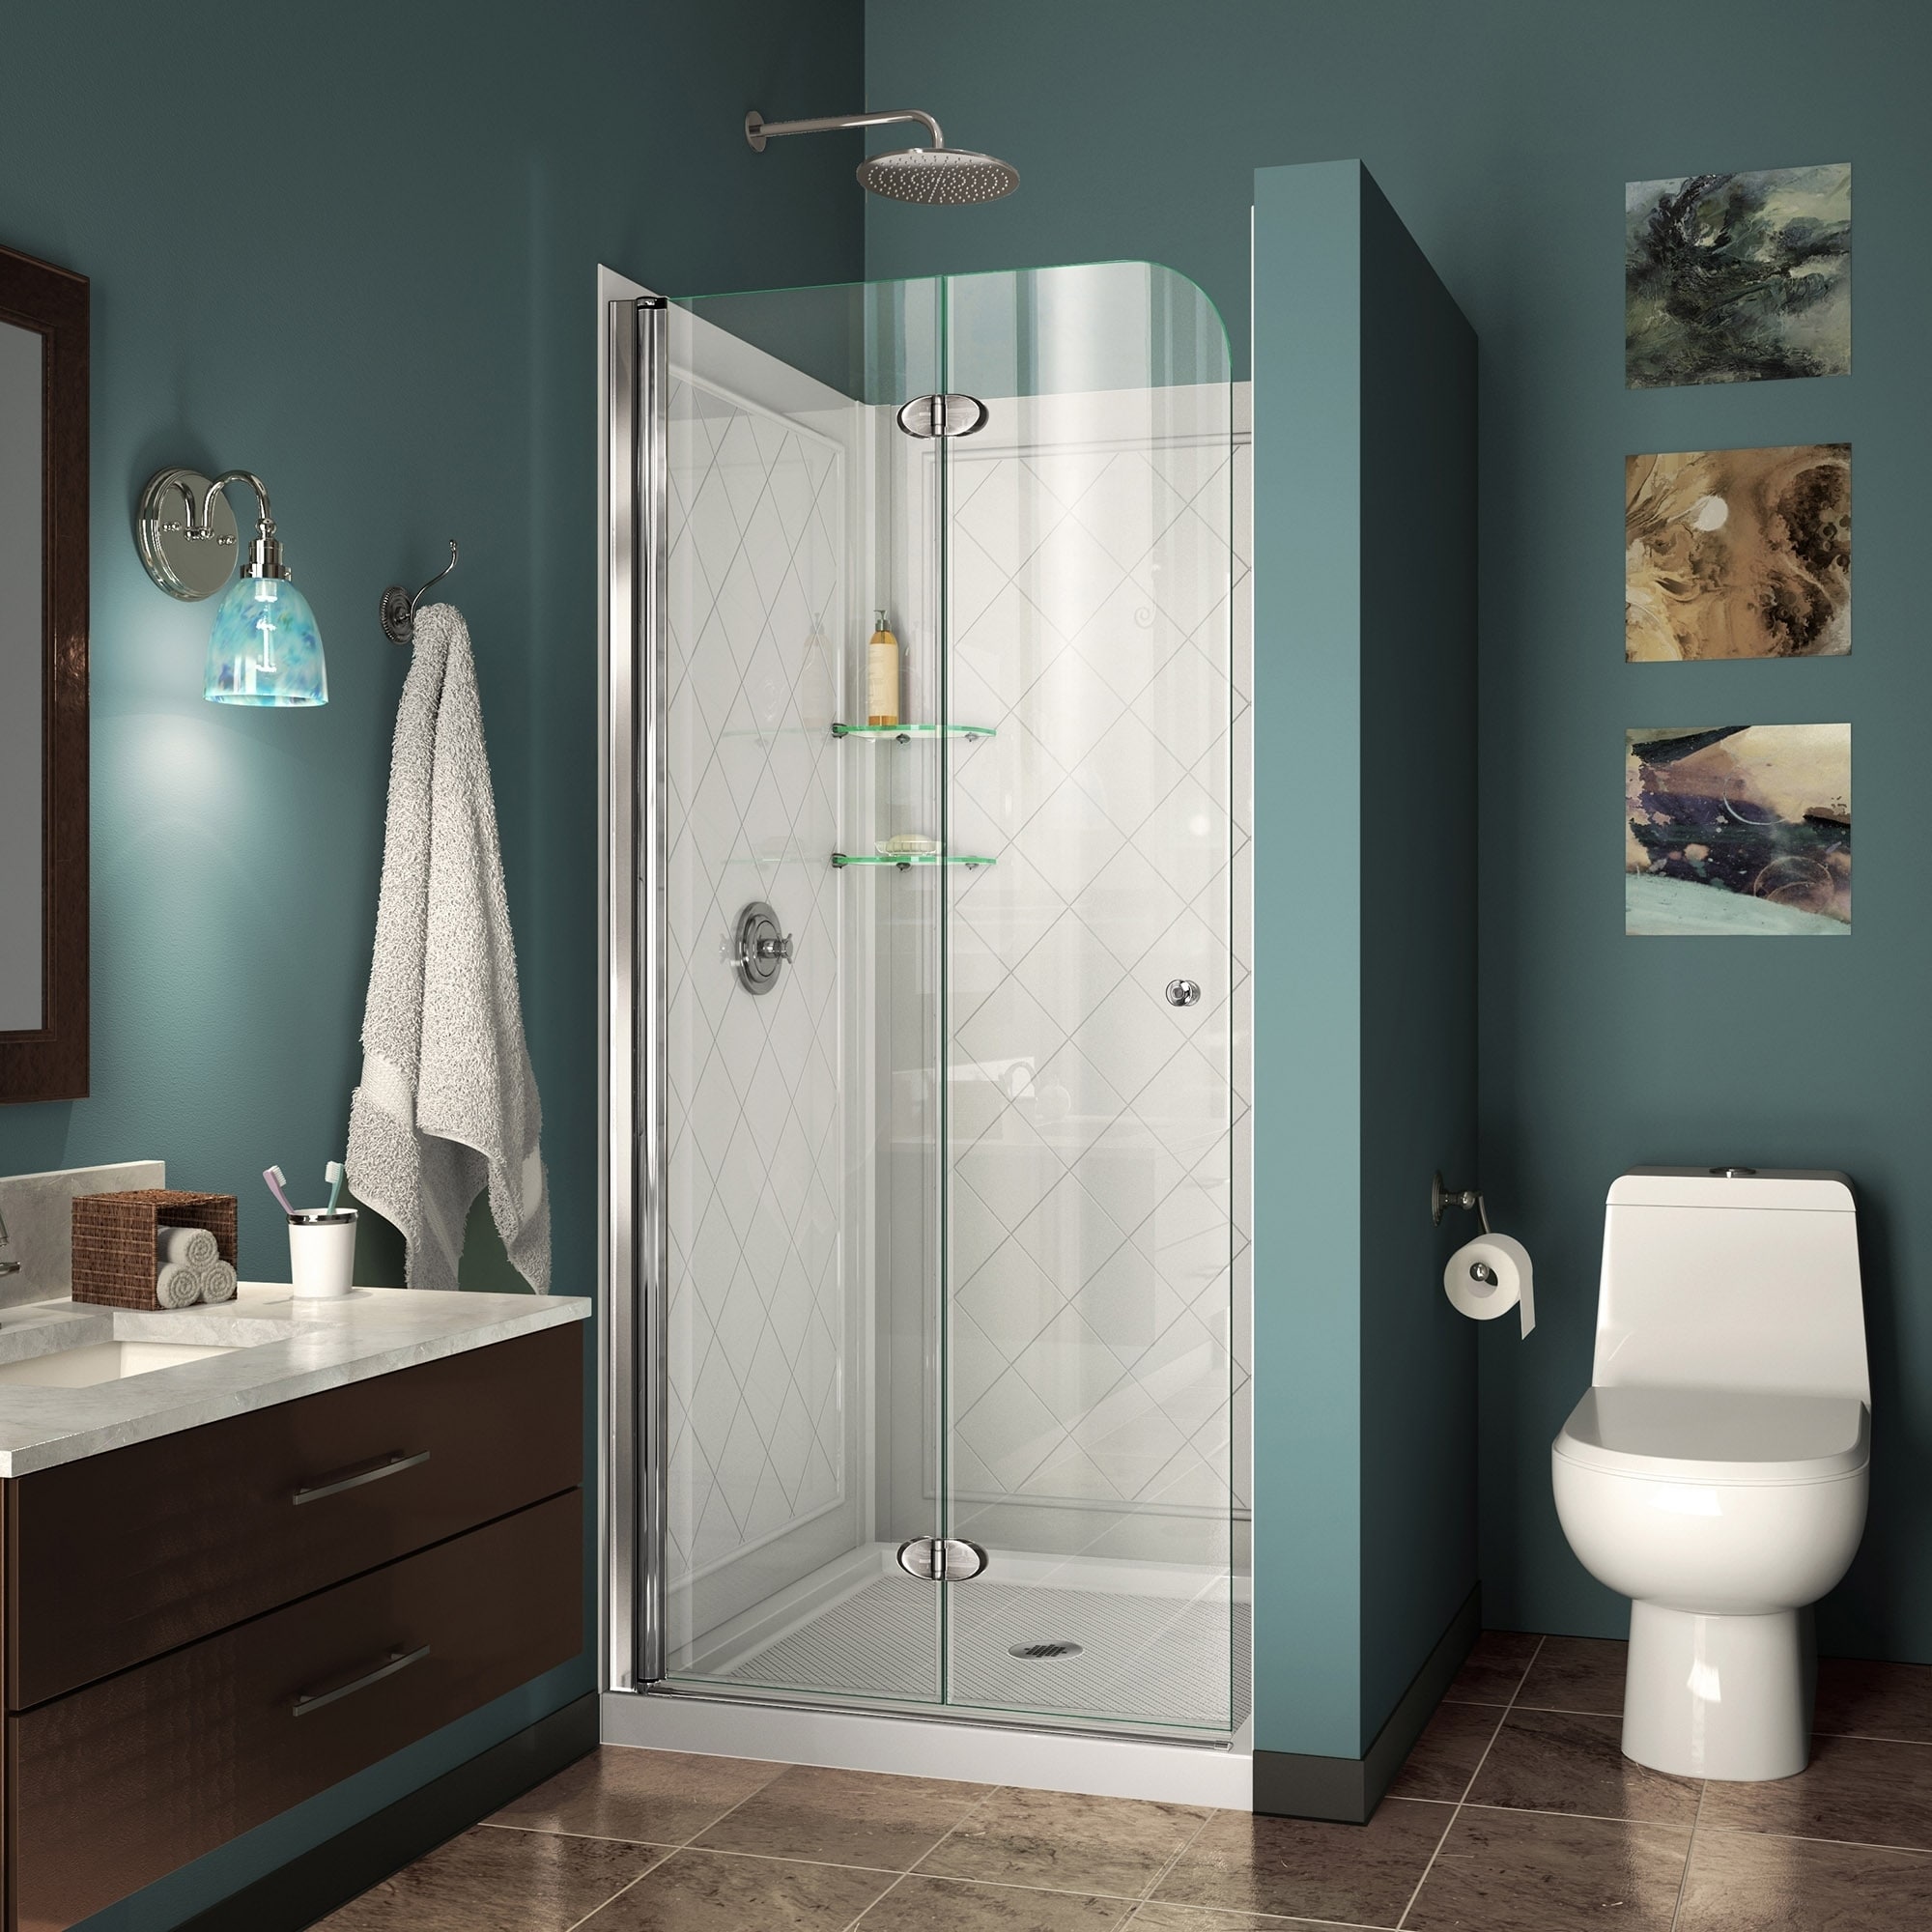 White ABS Toilet Shower Cabin Bathroom Sets Cabinet Sink Combo - China  Bathroom Sets, Shower Rooms